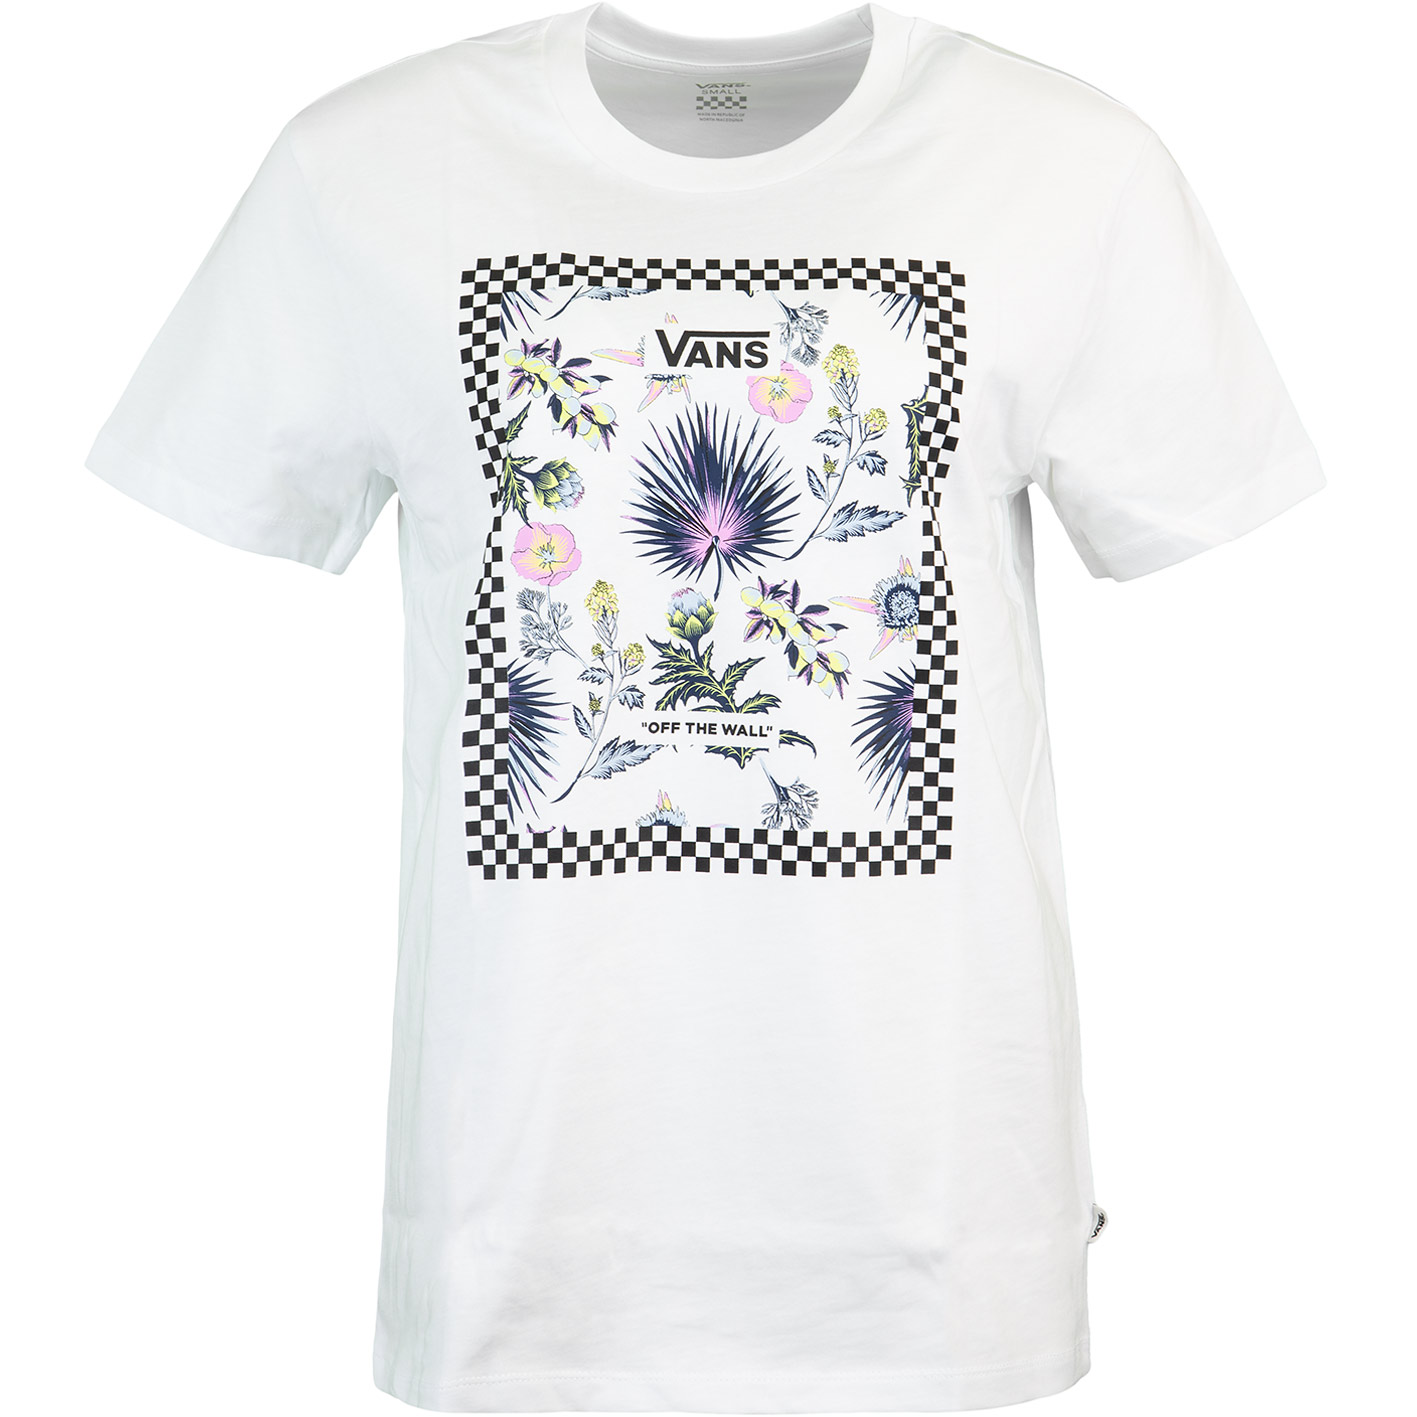 ☆ Vans Border Floral Damen Shirt weiß - hier bestellen!